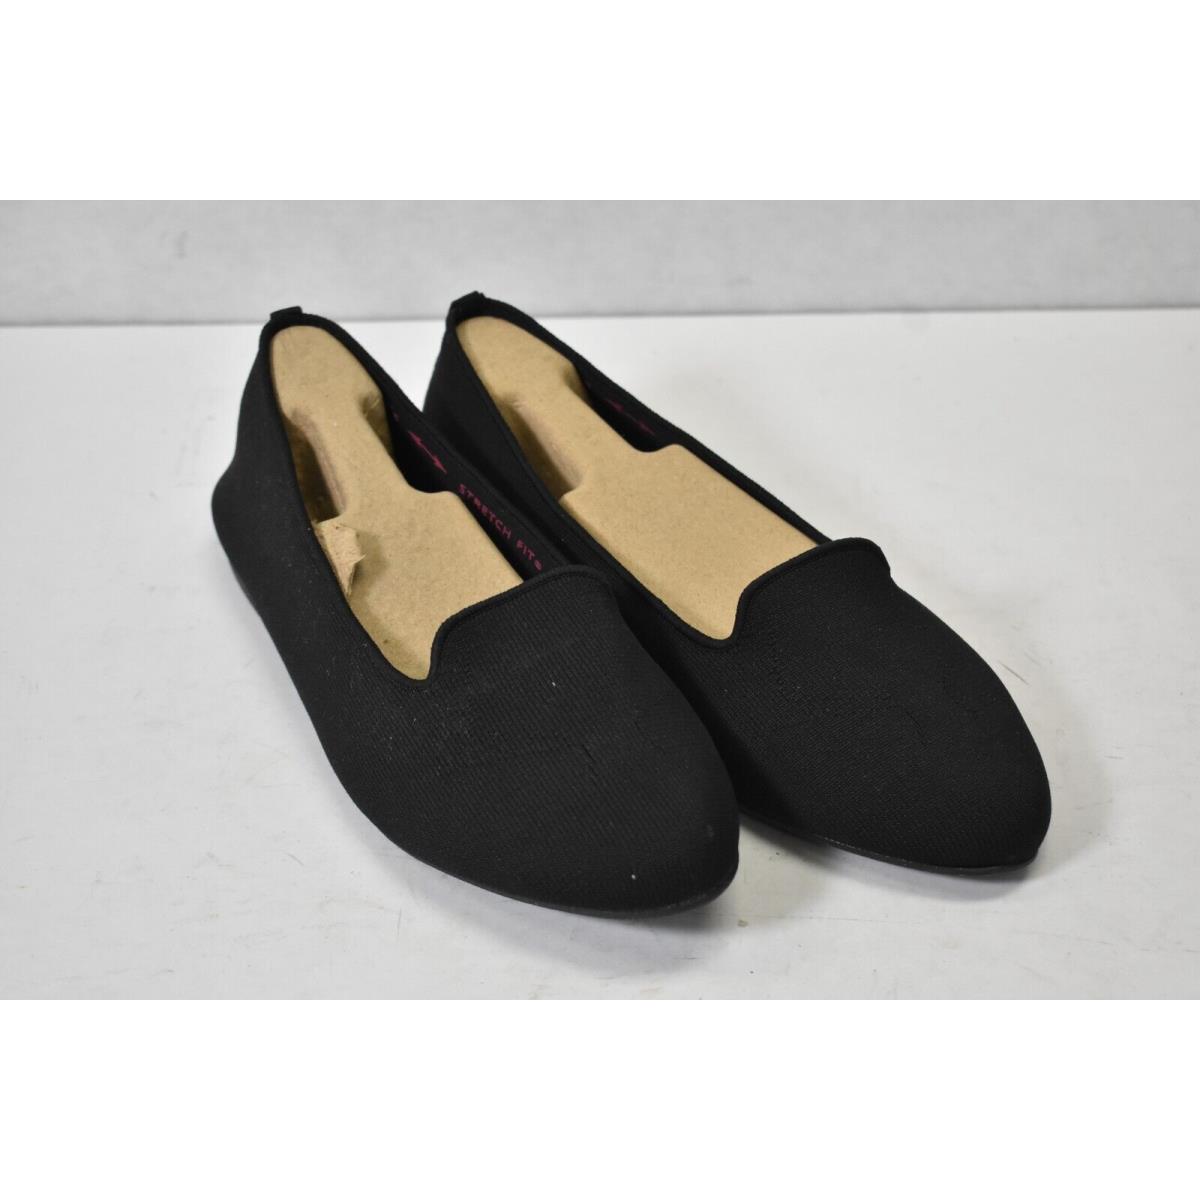 Skechers Womens Cleo Sherlock Knit Loafers Skimmer Ballet Flats Shoes Size 9.5